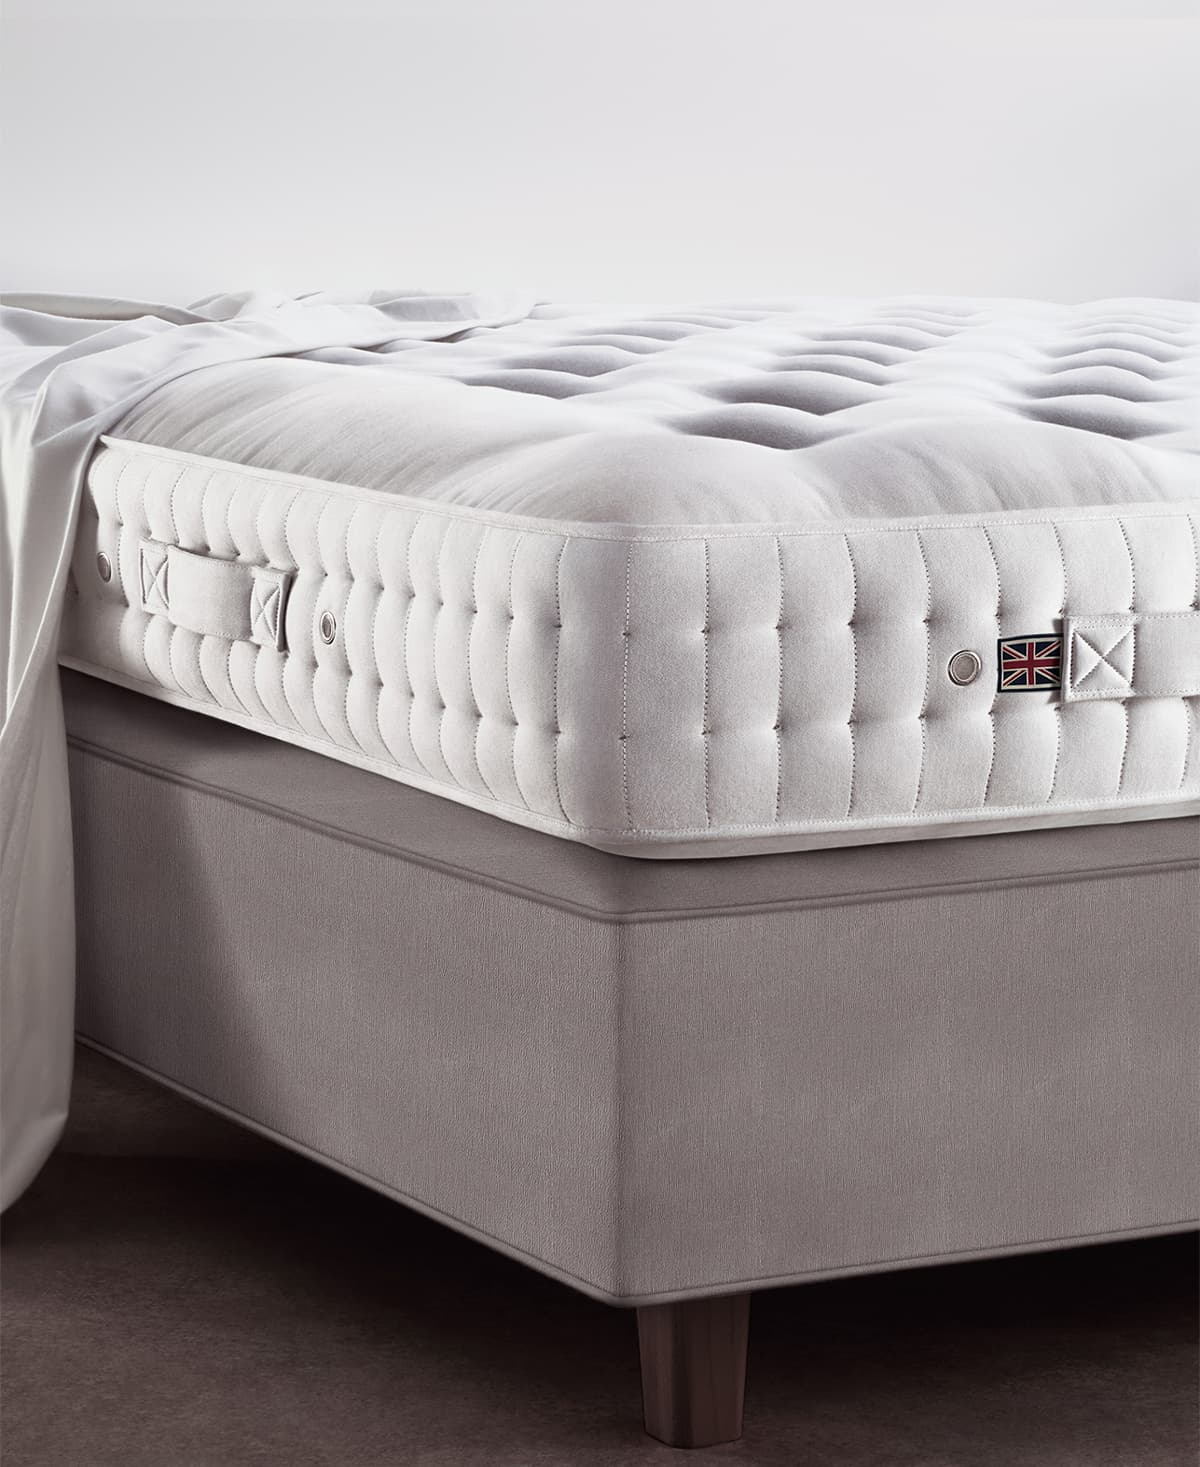 coronet mattress